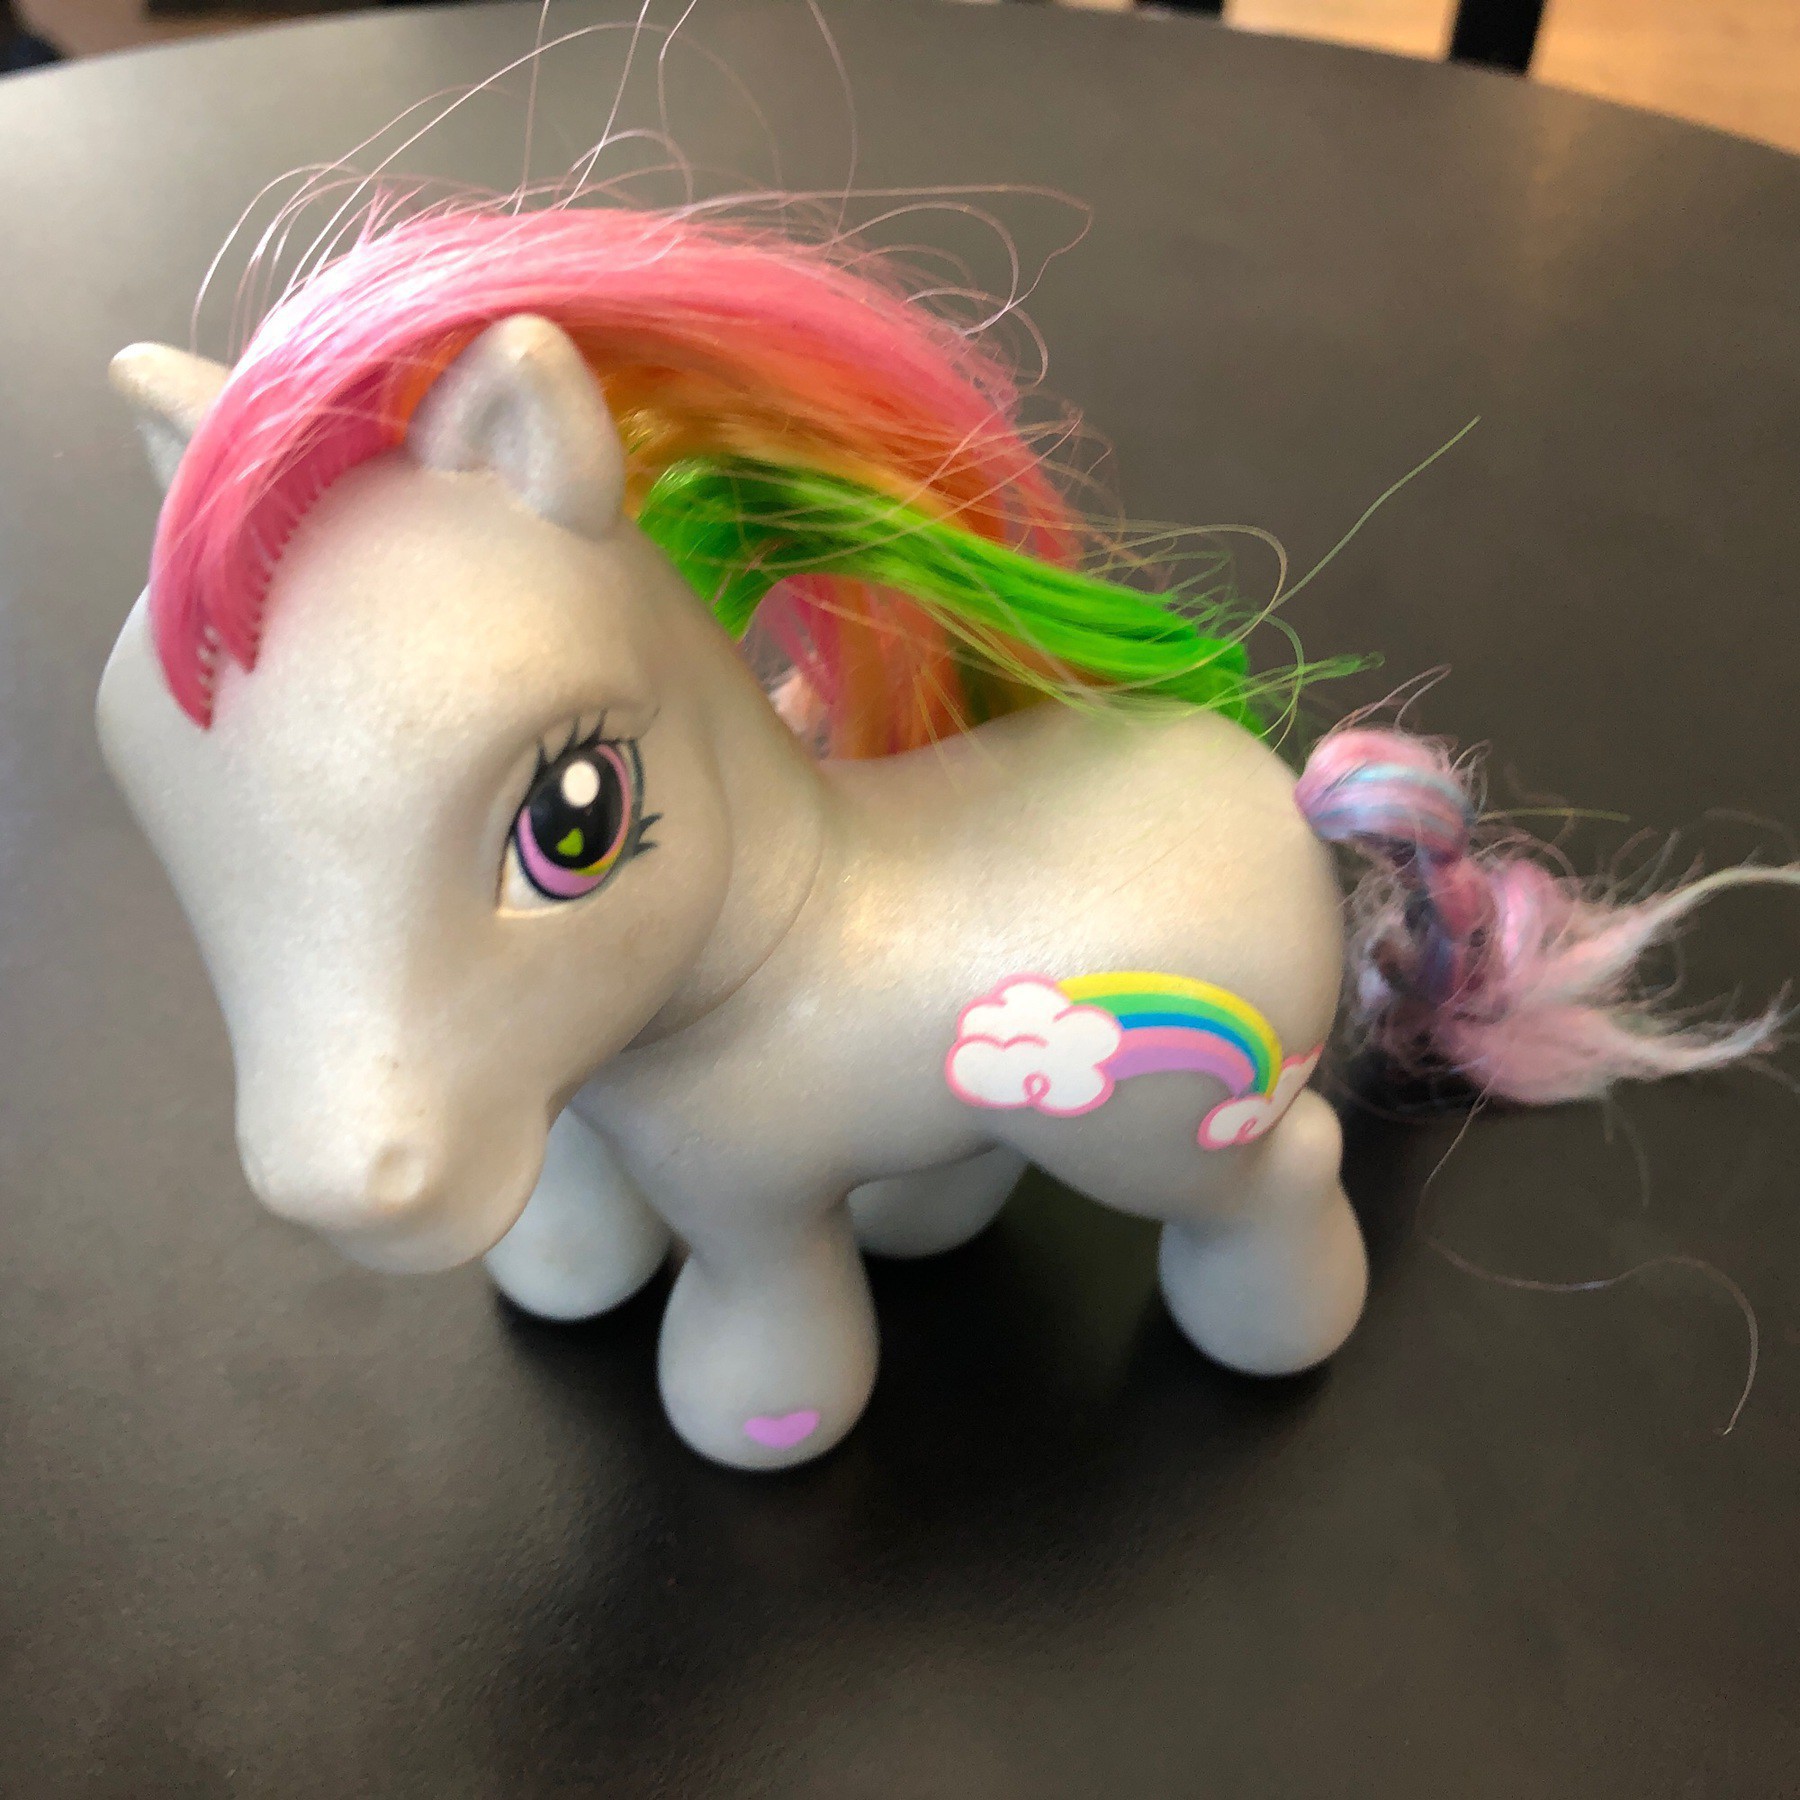 Plastic pony on table